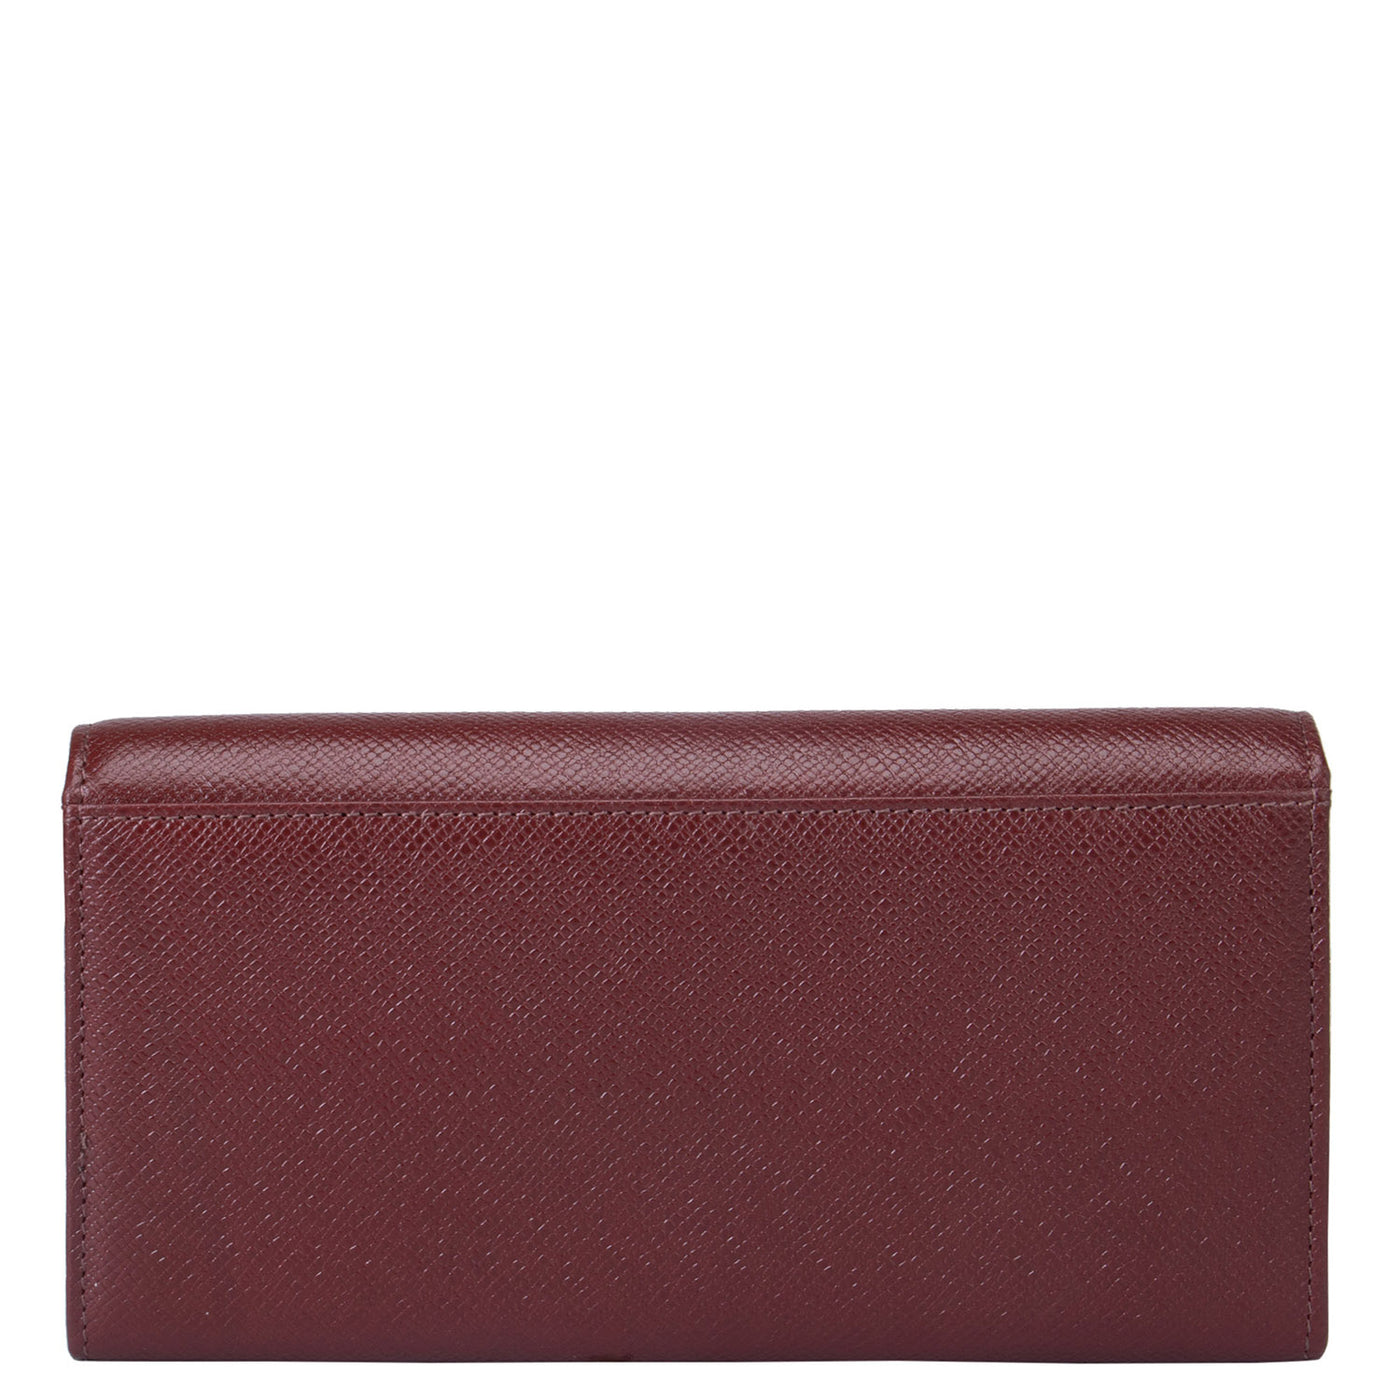 Franzy Leather Ladies Wallet - Blood Stone